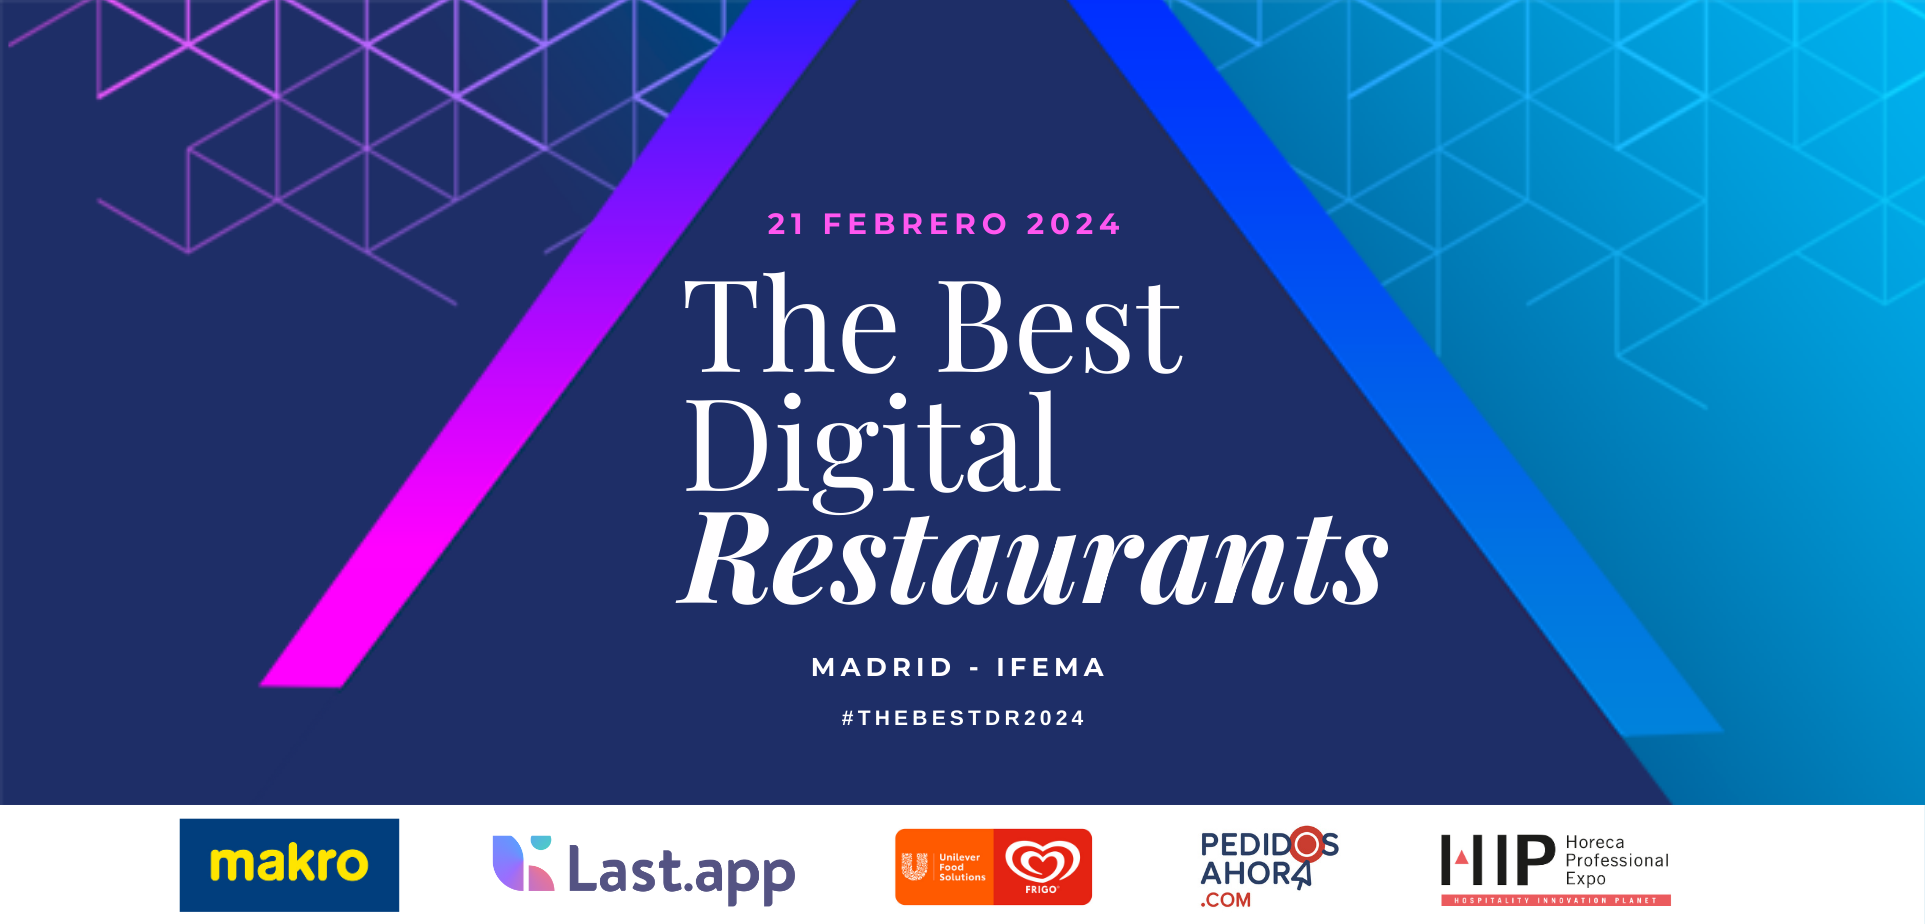 The Best Digital Restaurants 2024